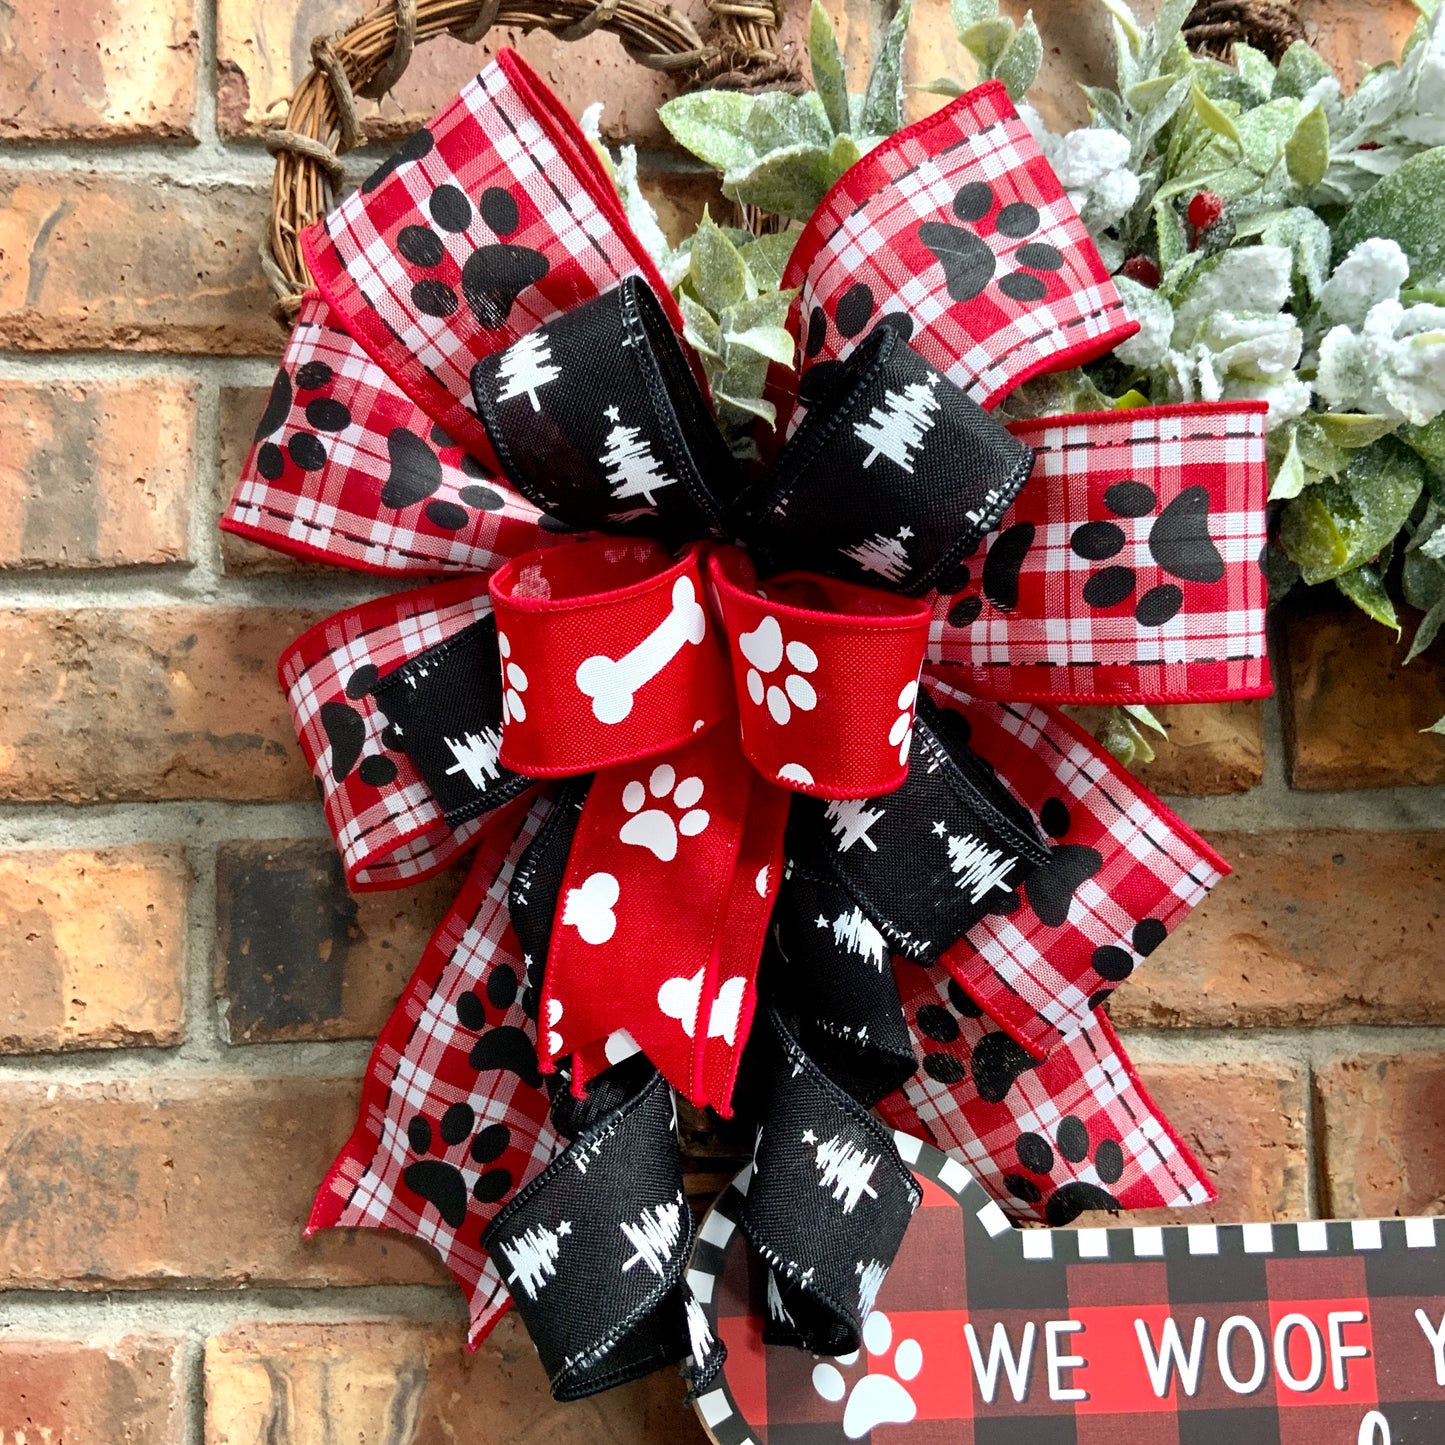 We Woof You A Merry Christmas Wreath, Christmas Dog Wreath, We Believe In Santa Paws Wreath, Christmas Dog Decor, Dog Wreath, Christmas Dog Door Hanger